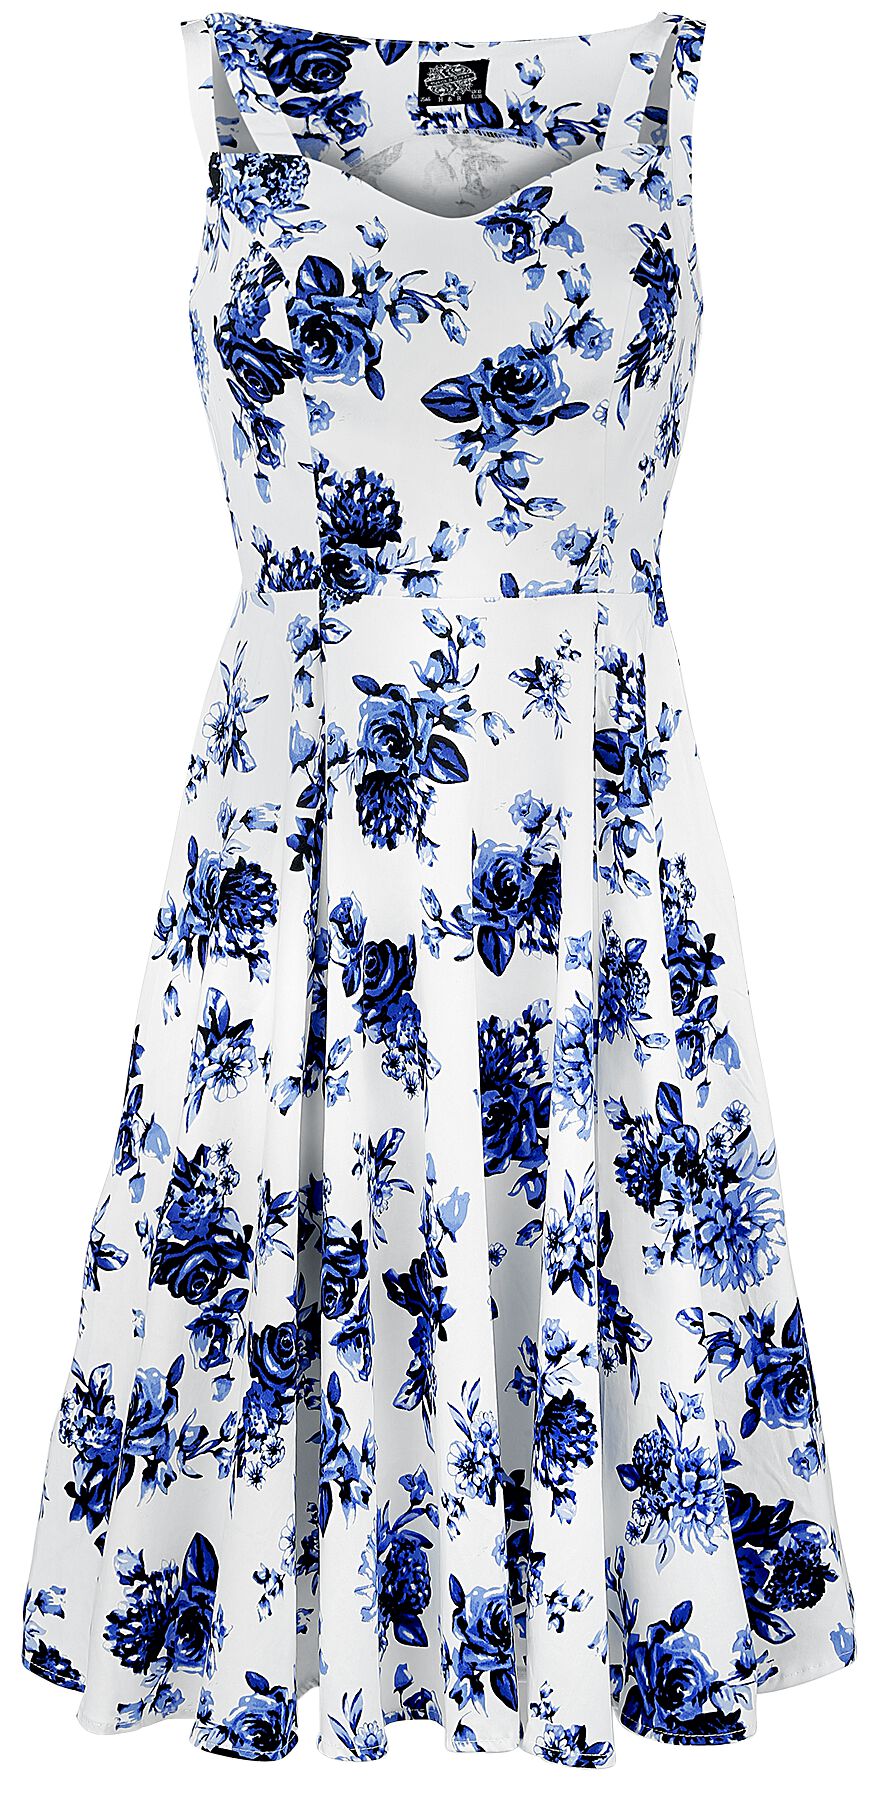 H&R London - Rockabilly Kleid knielang - Blue Rosaceae Swing Dress - S bis 3XL - für Damen - Größe XL - multicolor